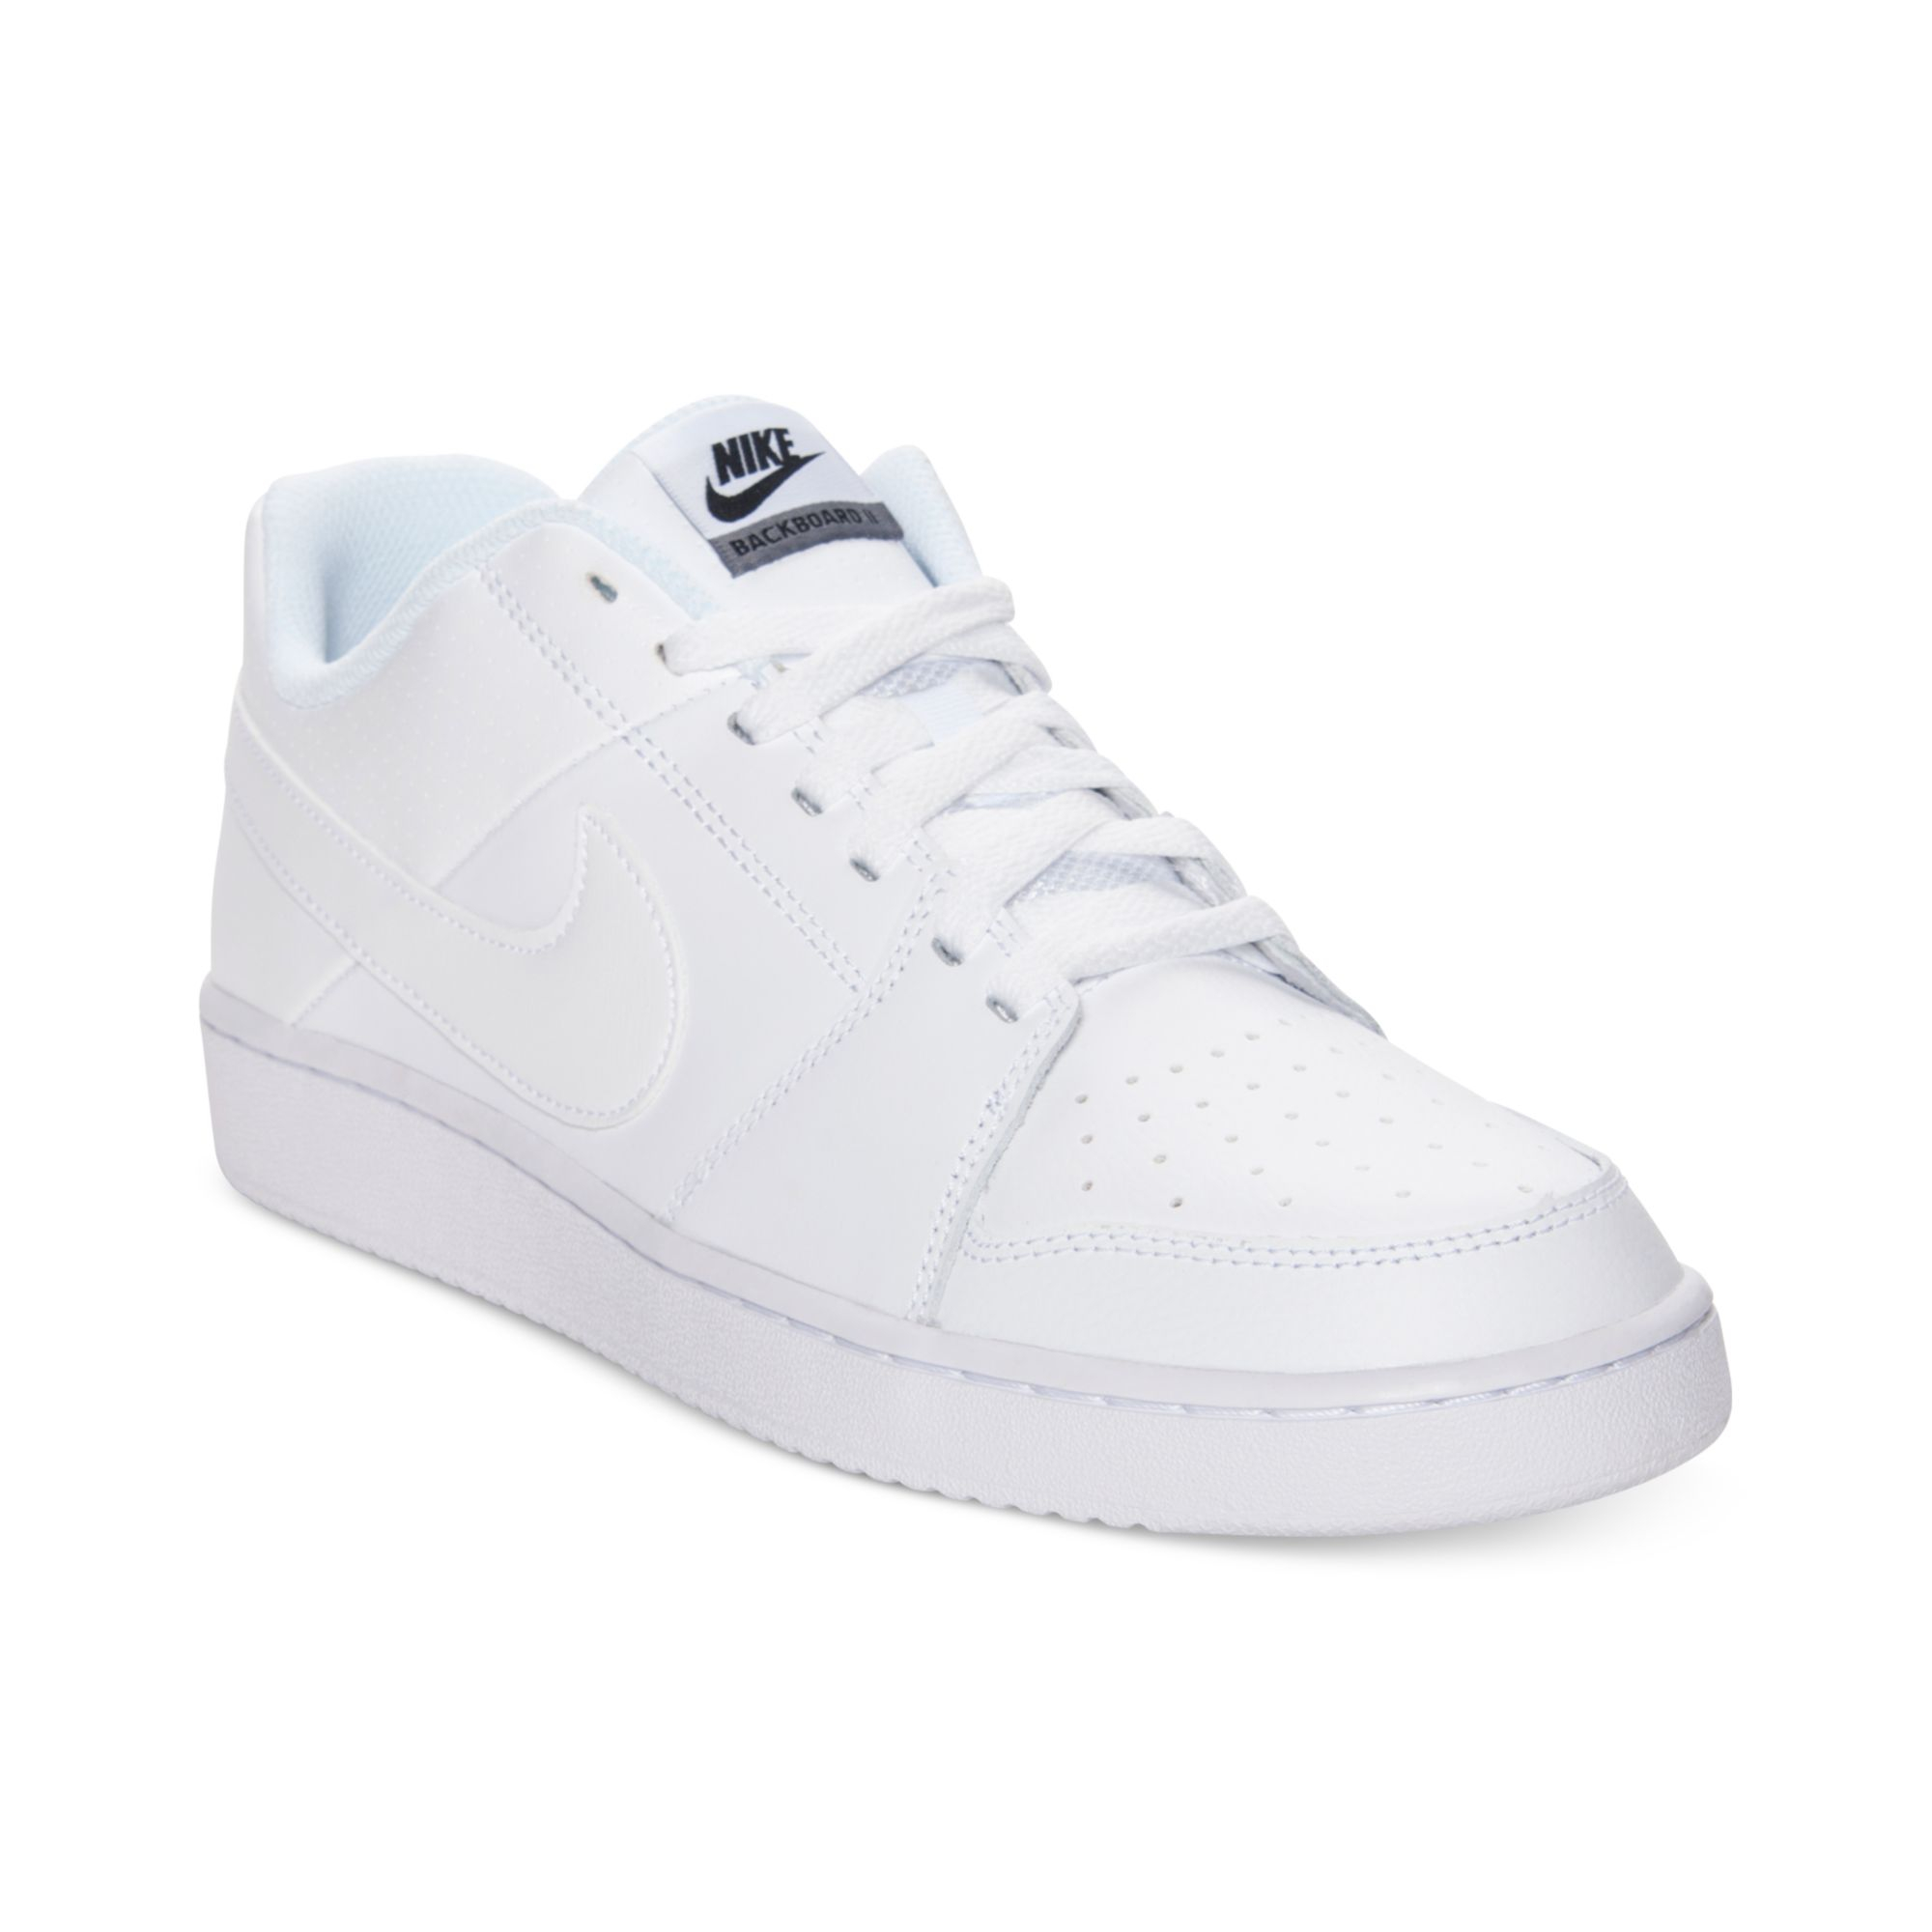 Nike Backboard Low Casual Sneakers in White/White/Black (White) for Men -  Lyst